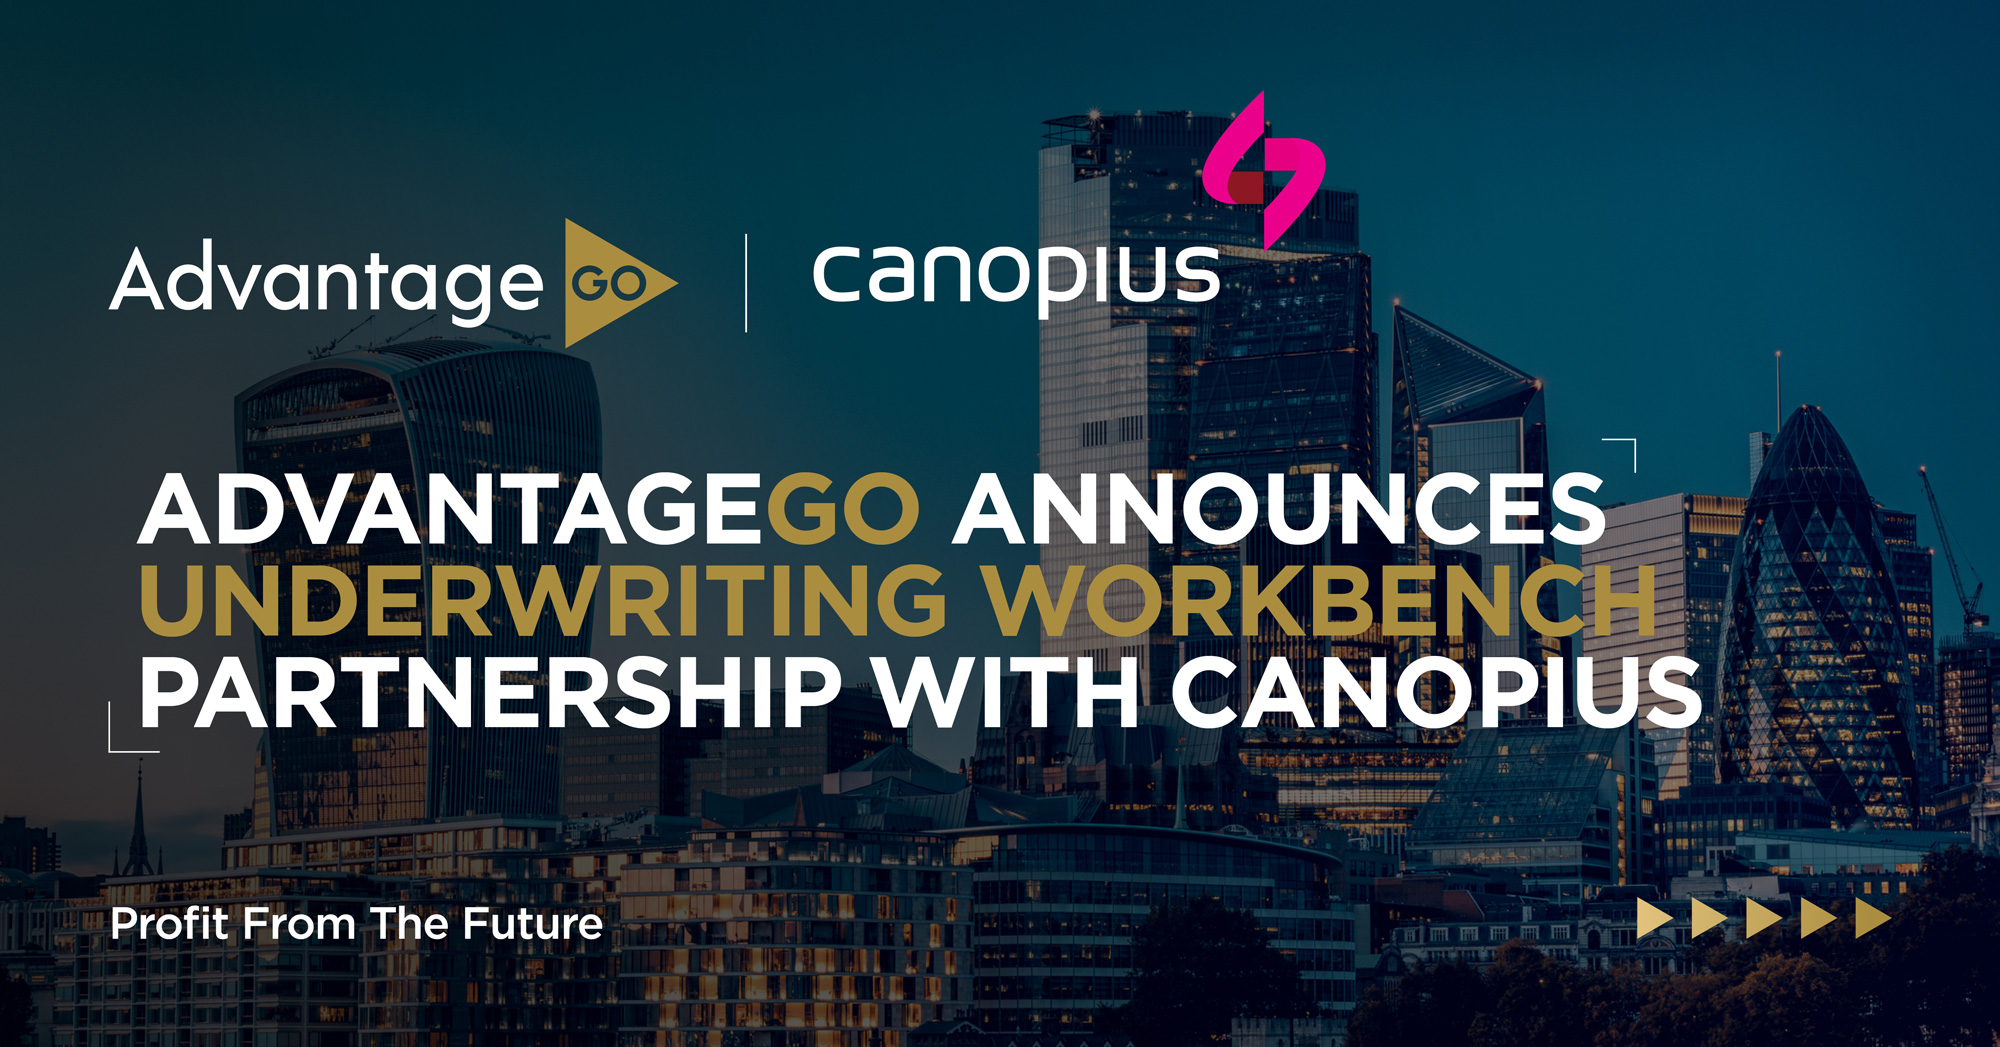 Canopius and AdvantageGo Partnership